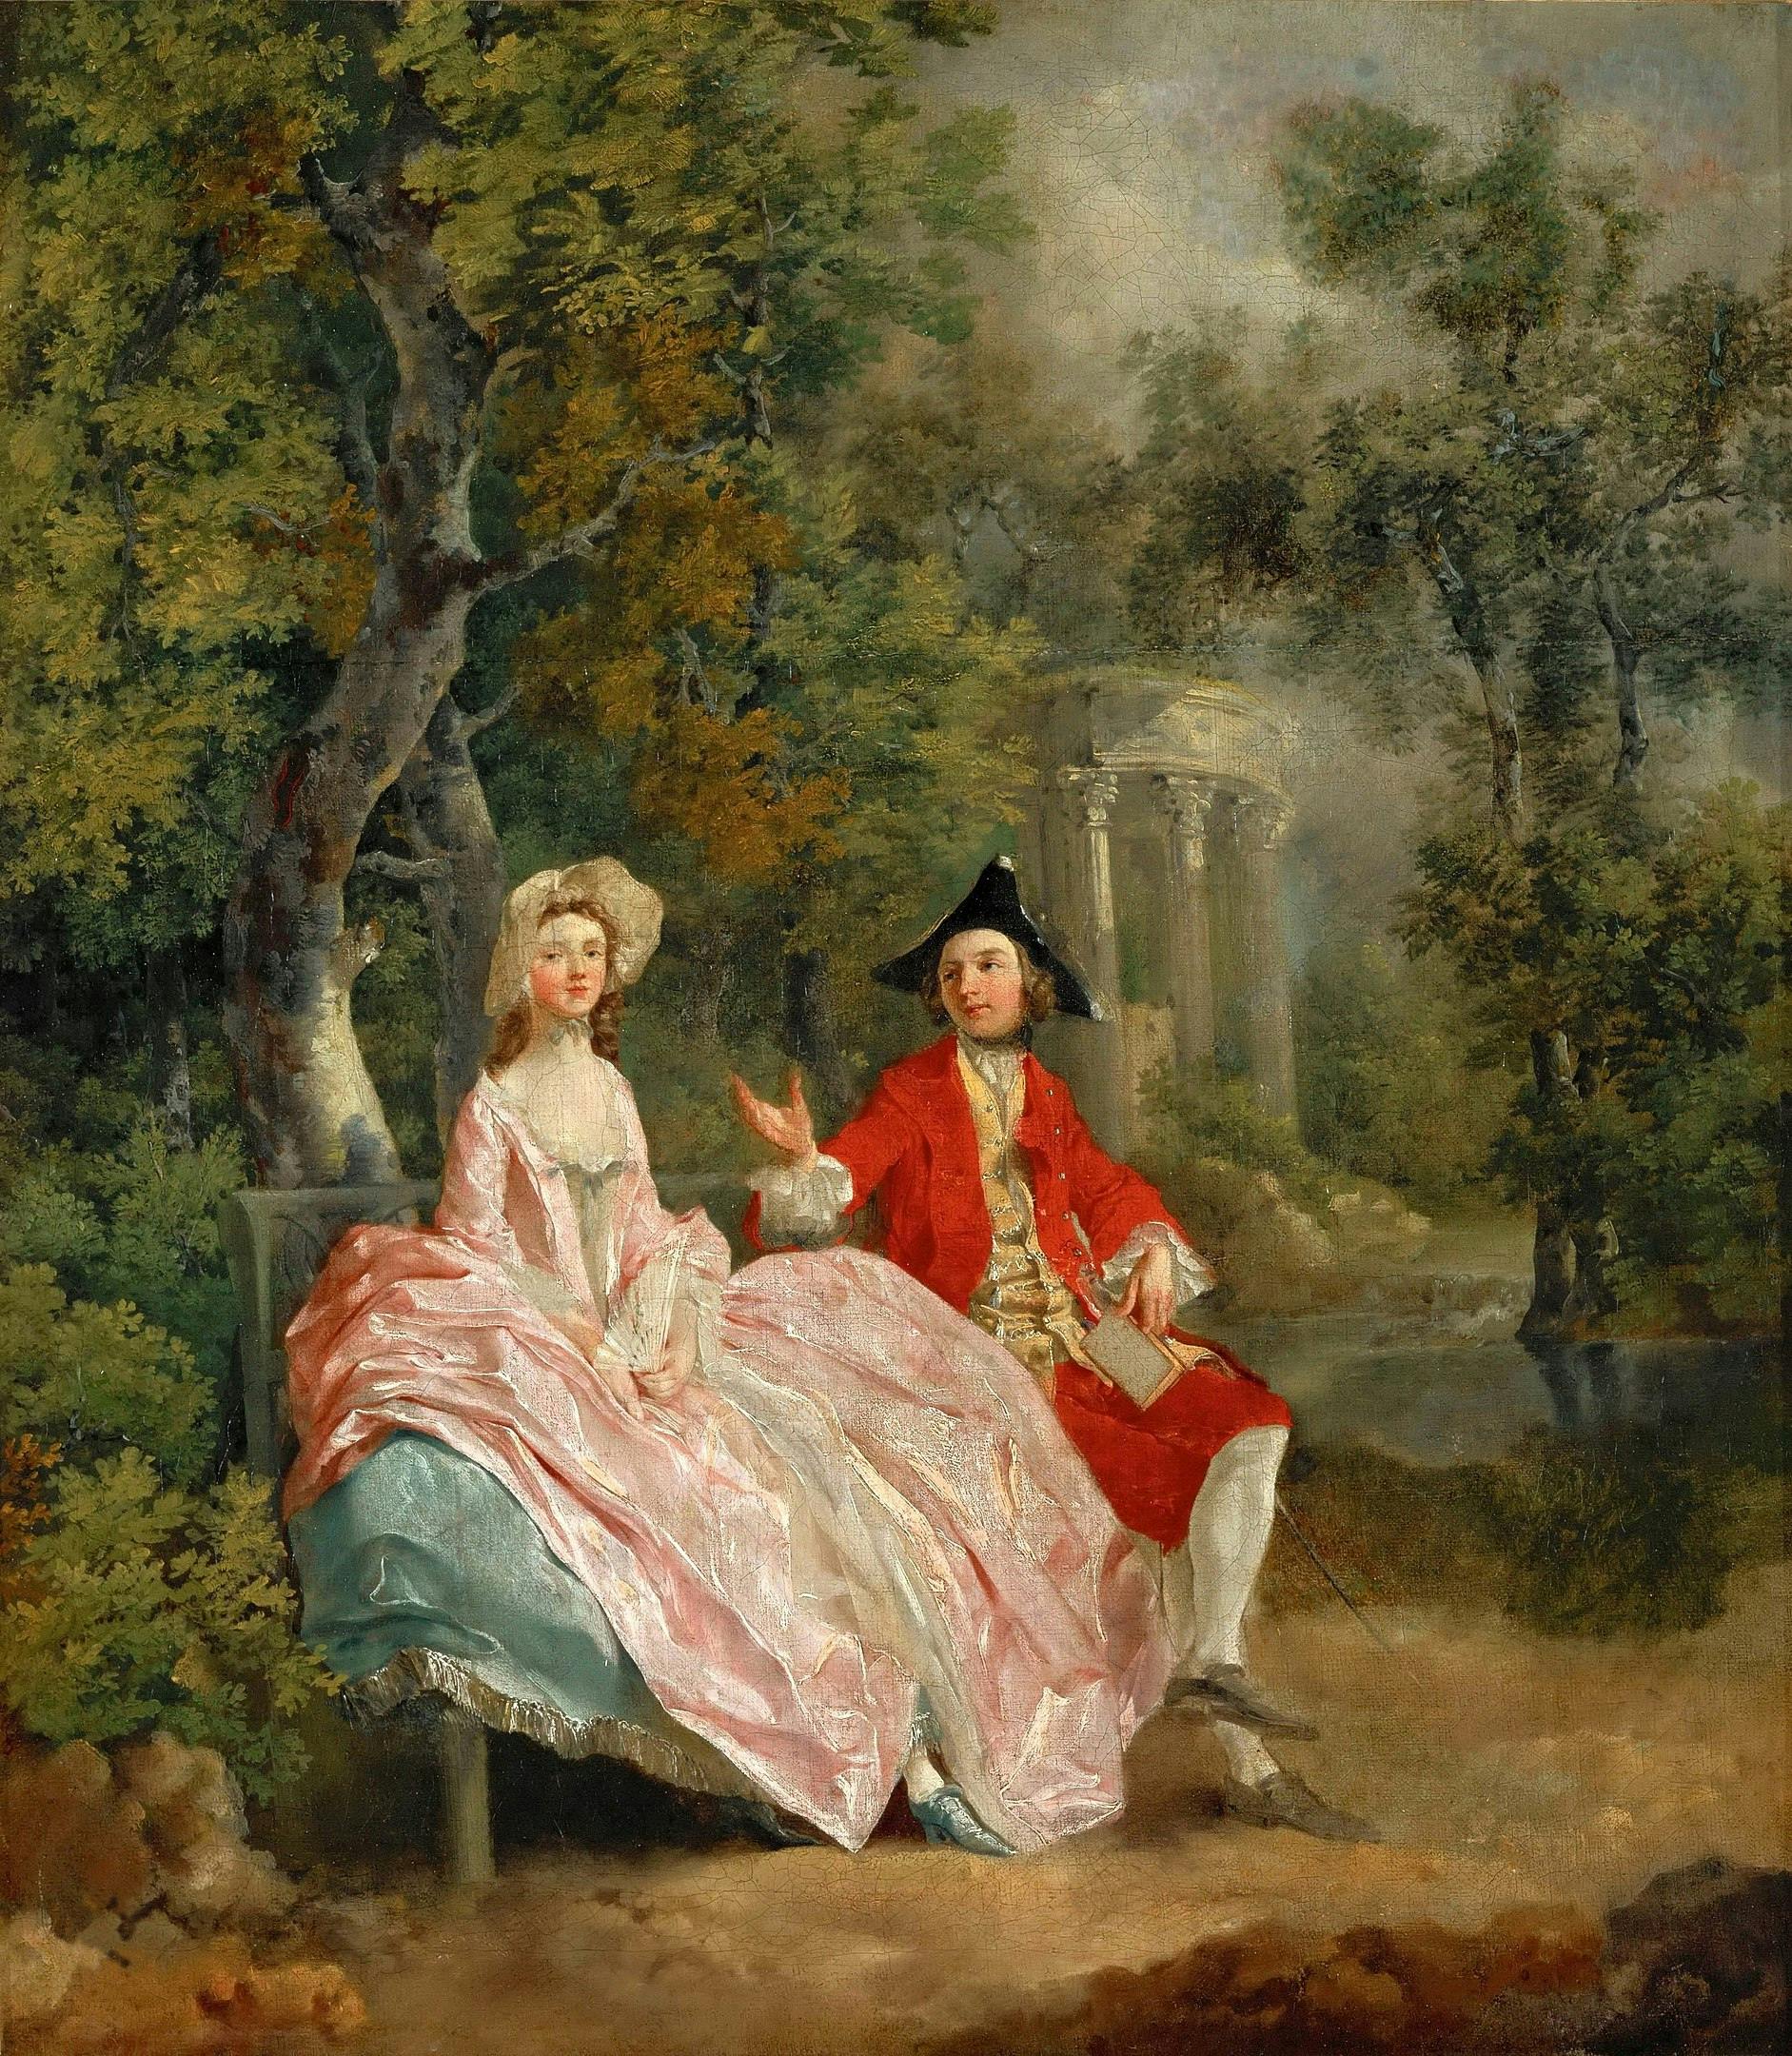 Thomas Gainsborough, Conversation in a Park (1746)